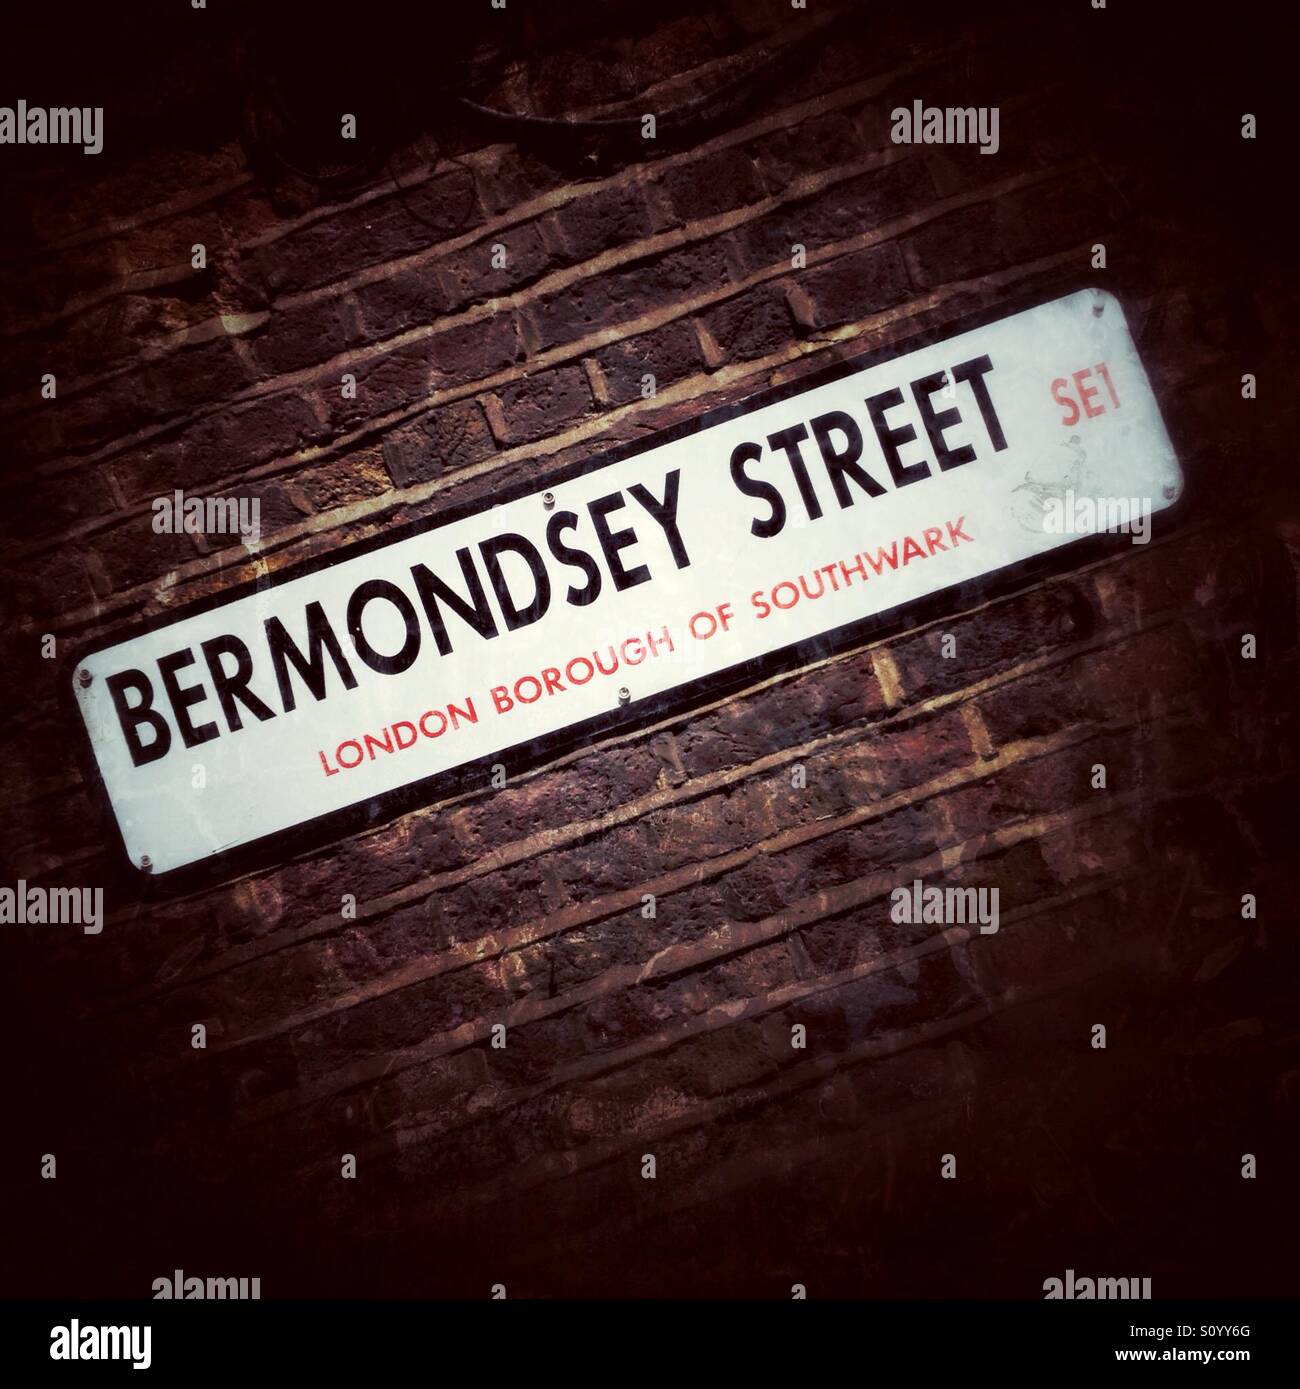 Street sign of Bermondsey Street In london se1 Stock Photo